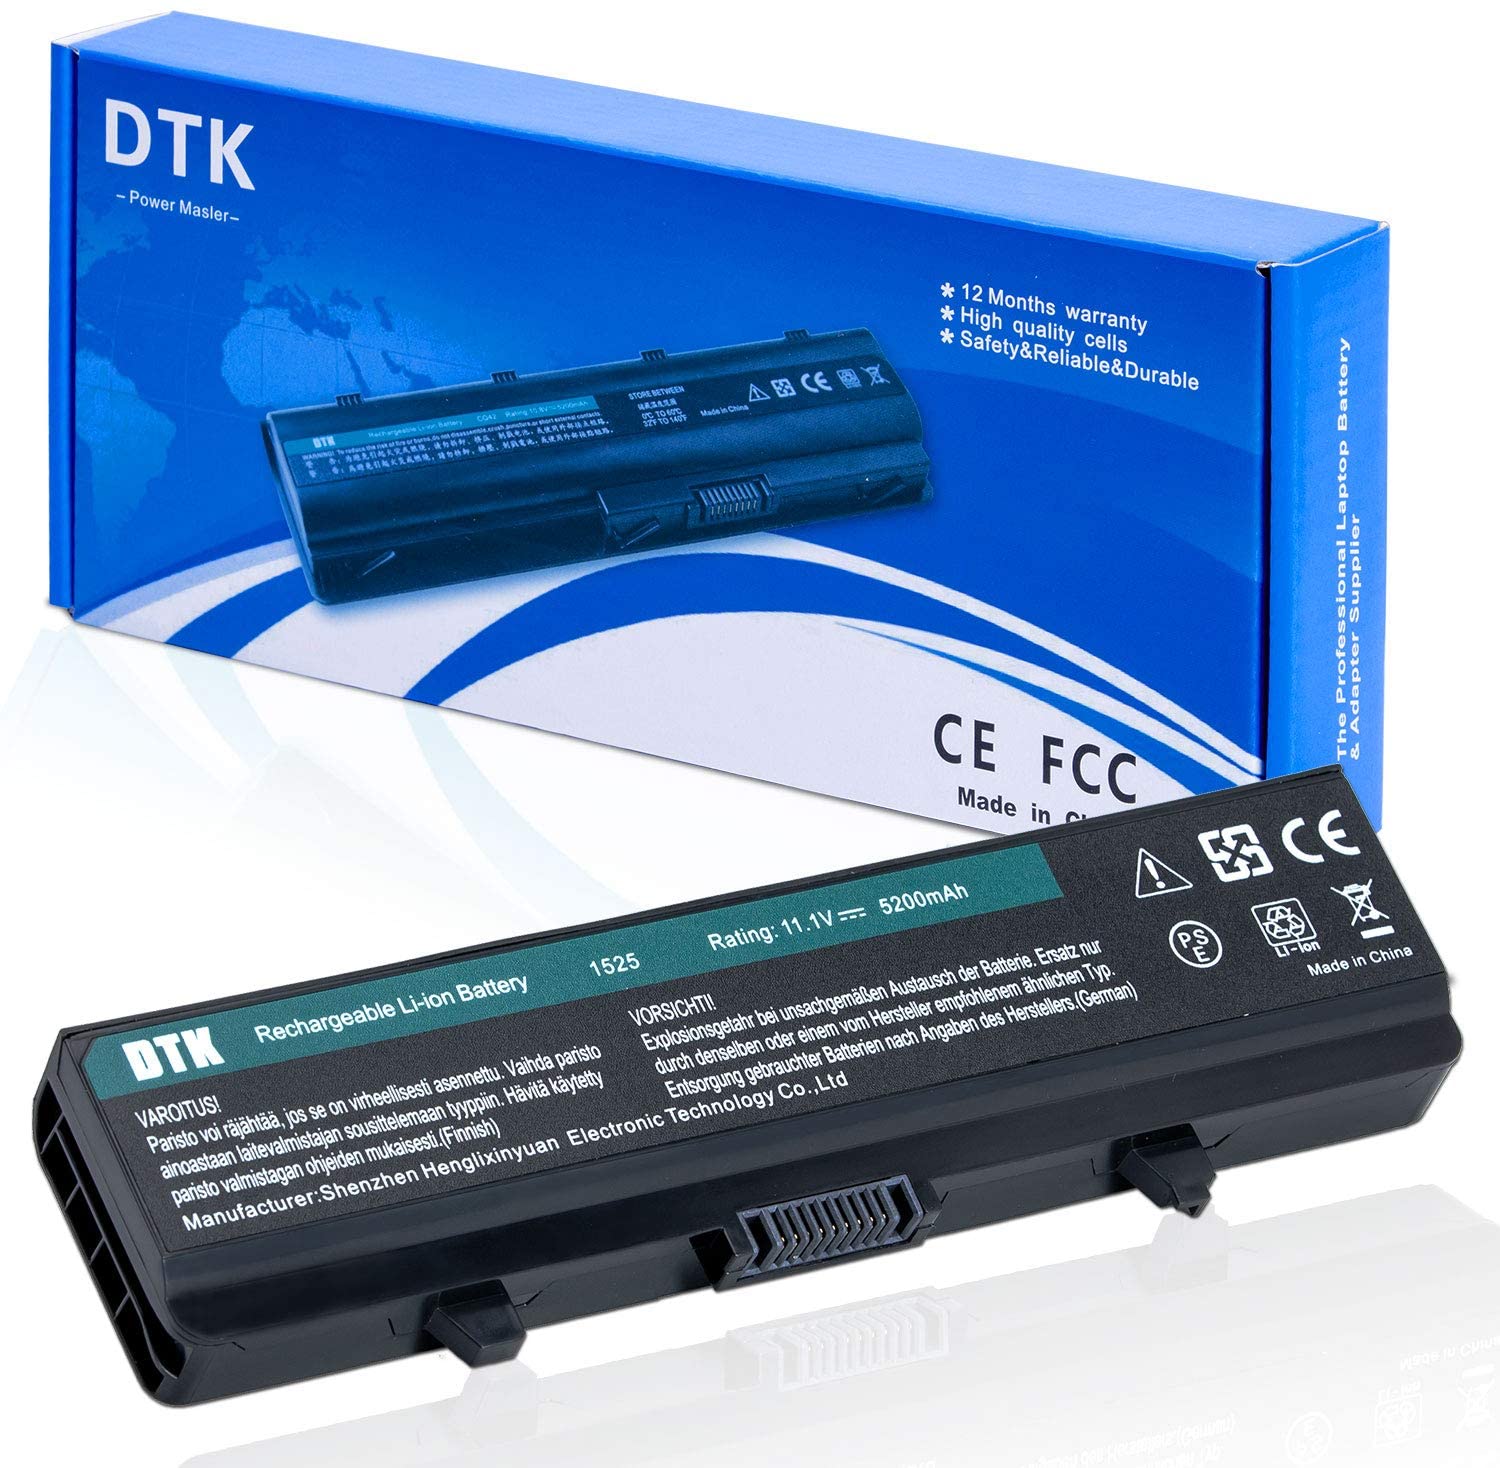 DTK Laptop Battery for Dell Inspiron* - Bargainwizz